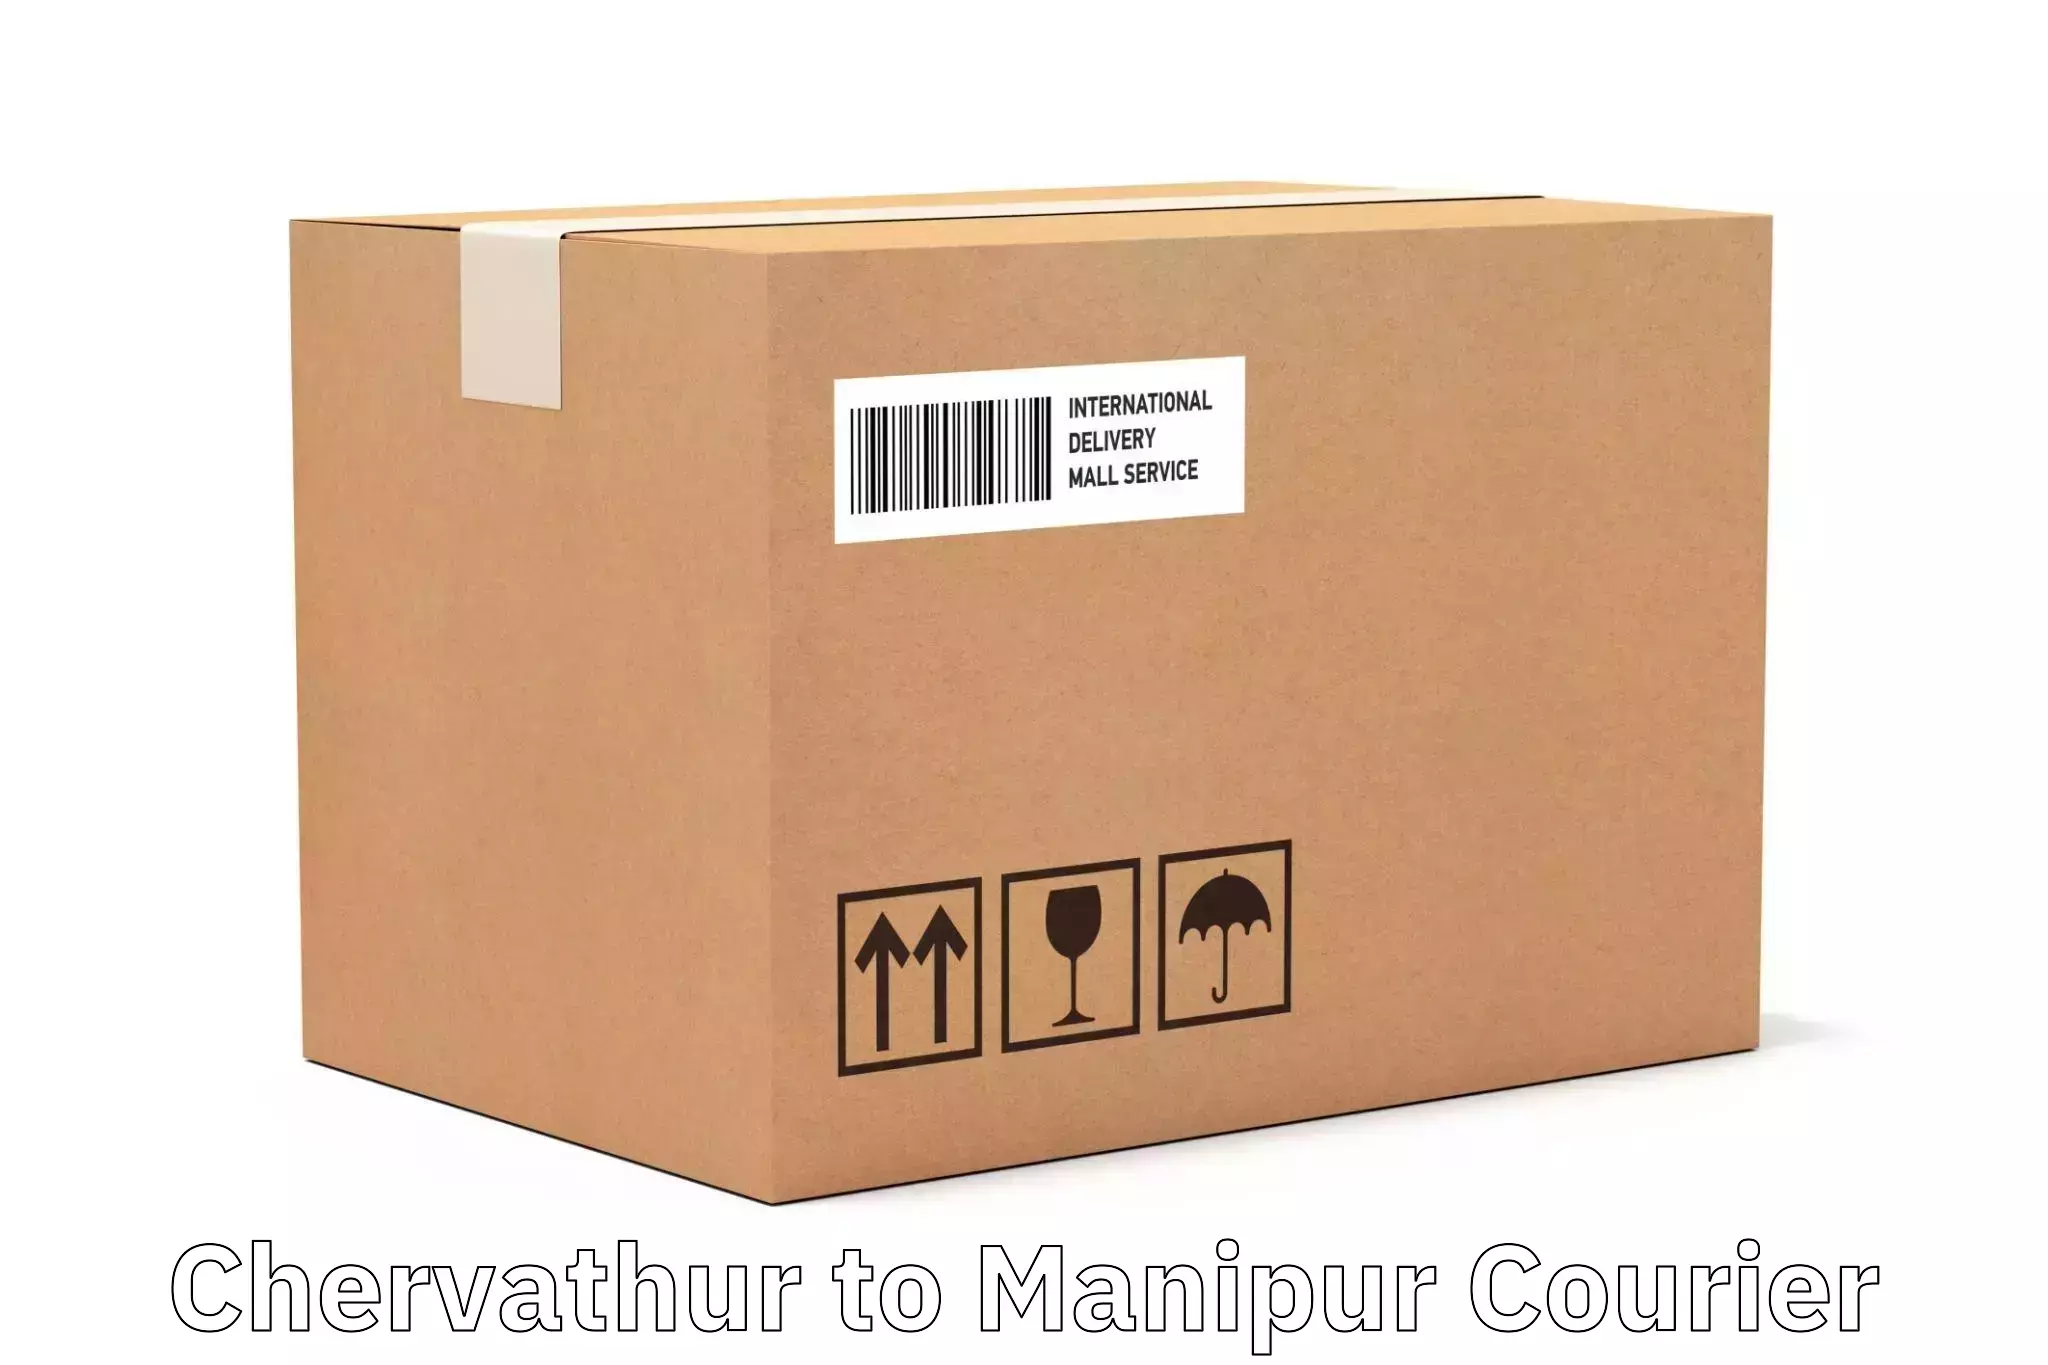 Nationwide parcel services Chervathur to Imphal